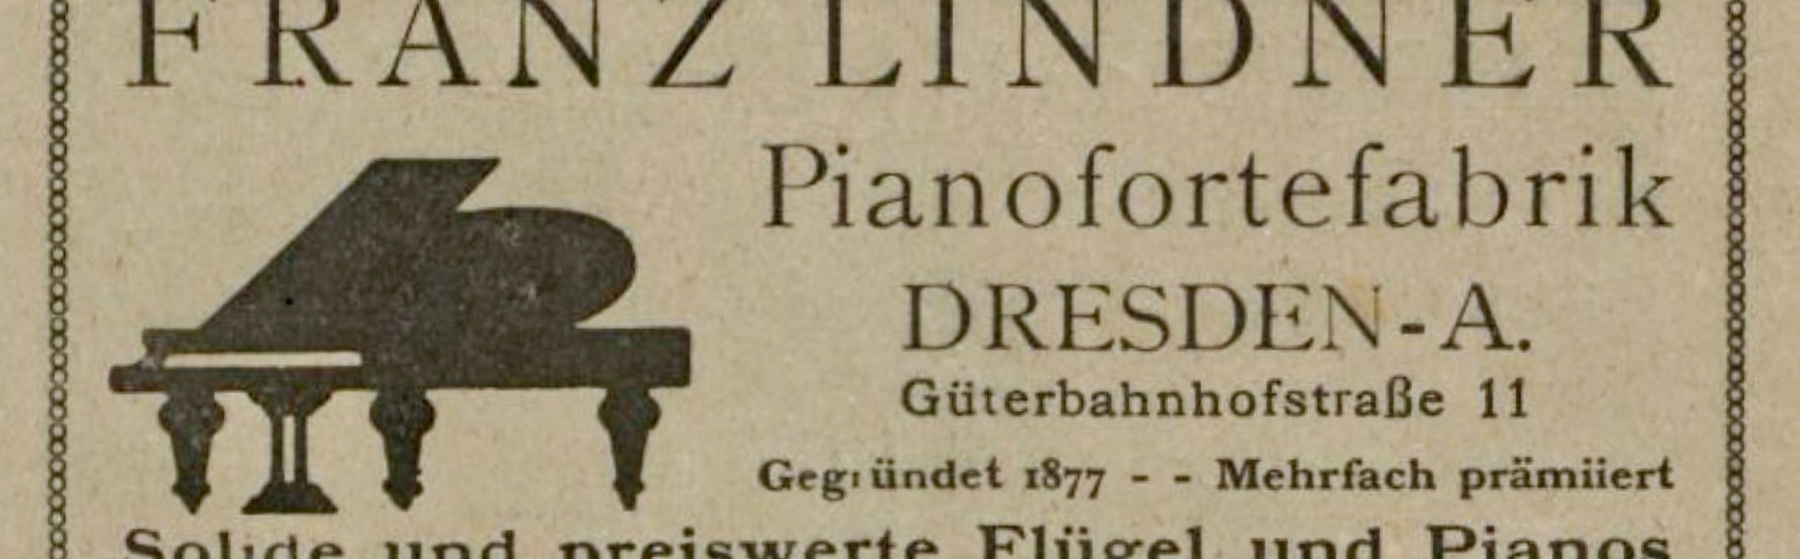 Werbung Pianofortefabrik Franz Lindner (1921)